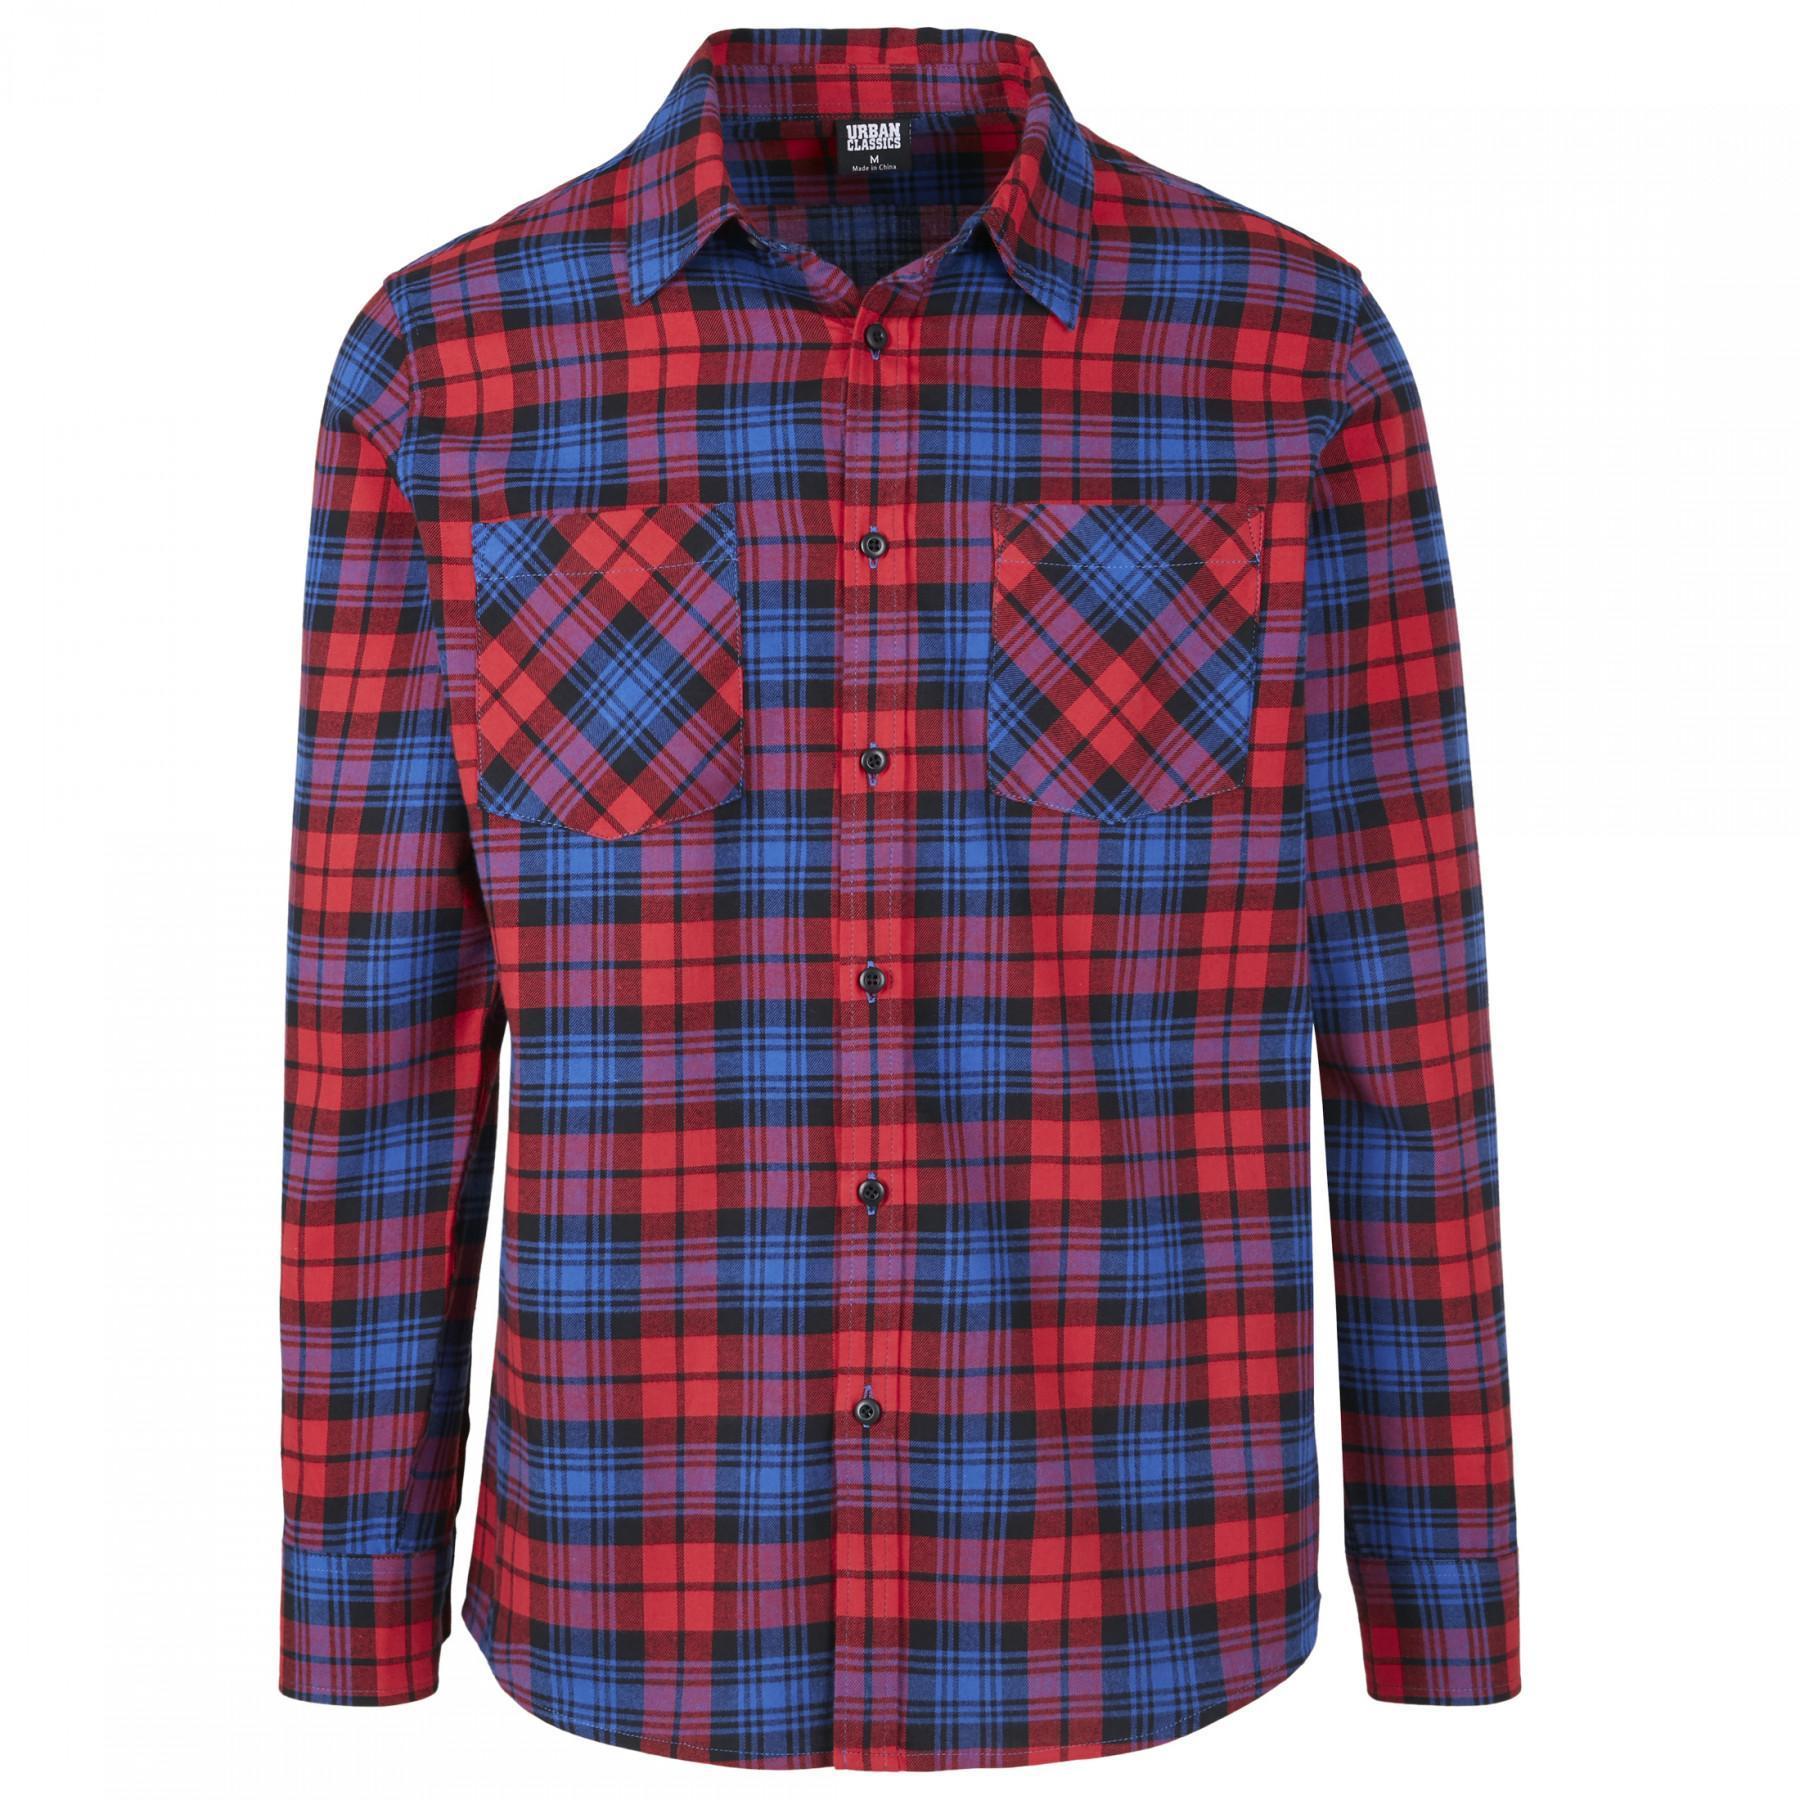 Urban classic flannel shirt 5 gt